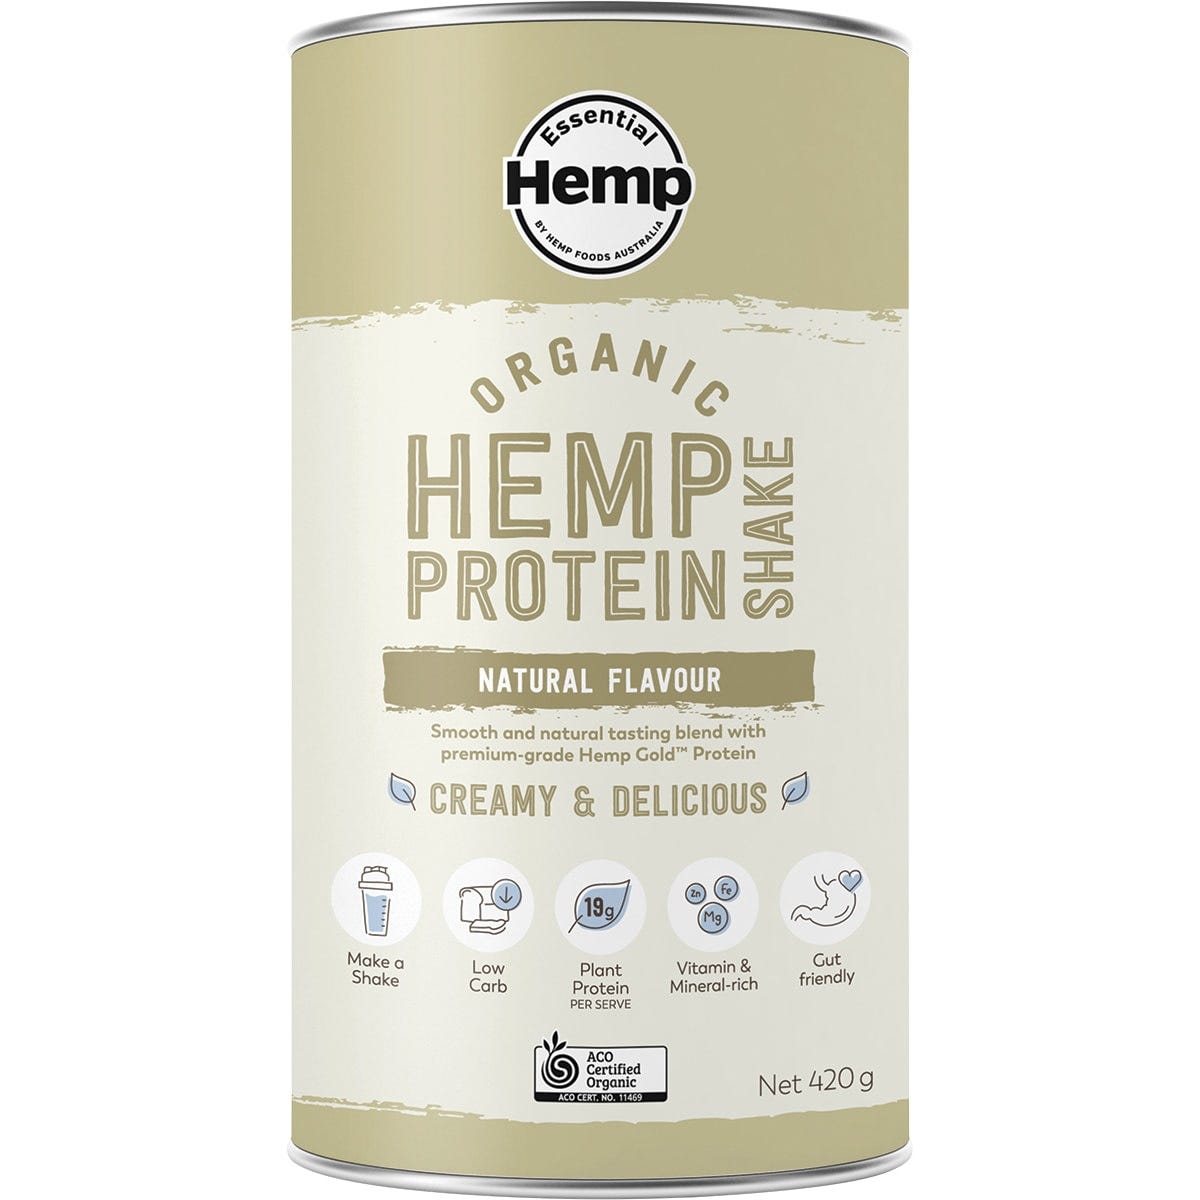 Hemp Foods Australia Organic Hemp Protein Natural 420g - Dr Earth - Hemp, Nutrition